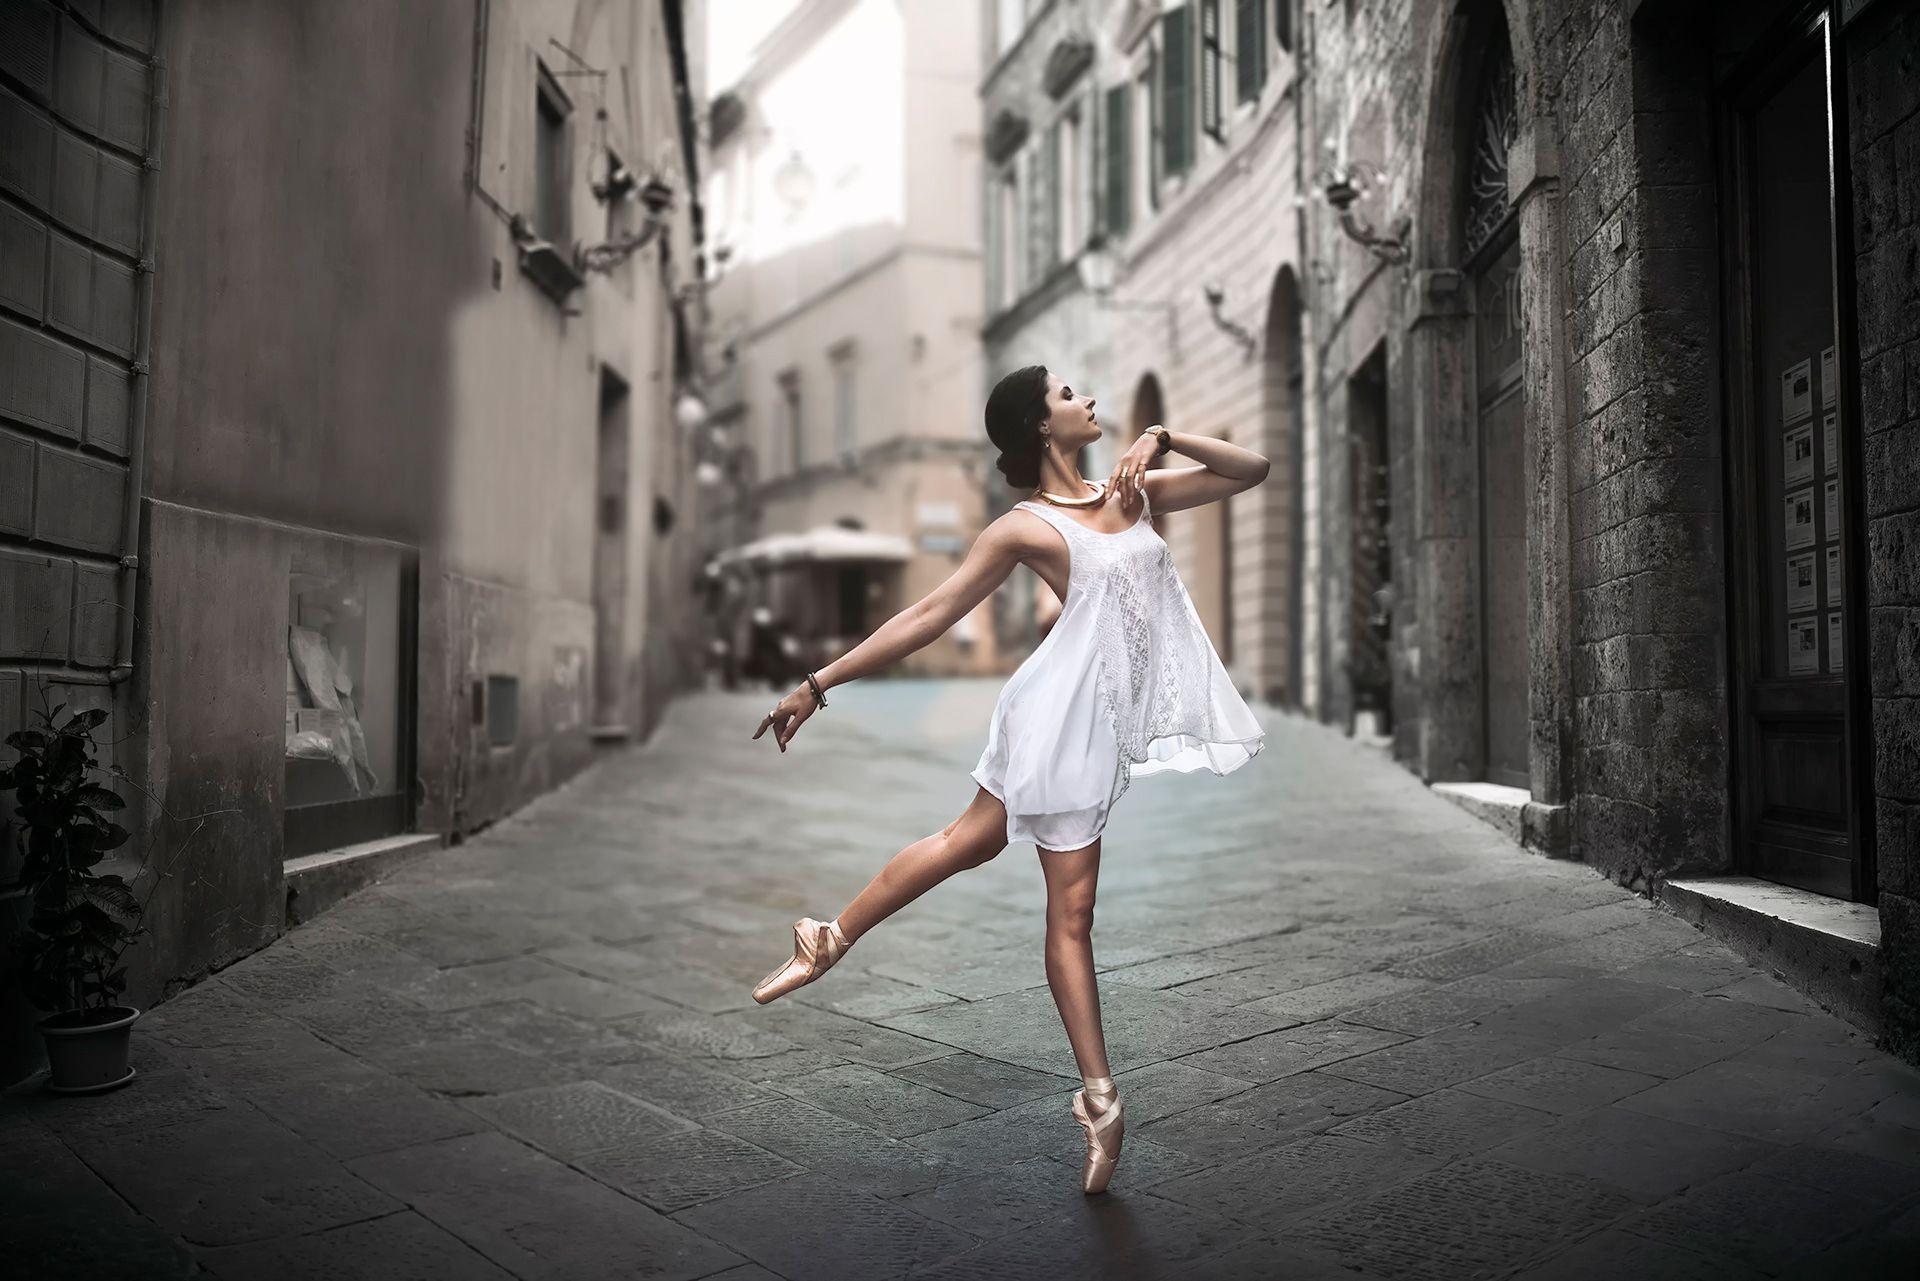 Street Ballerina. City, street, ballerina, pointe, ballet, dance